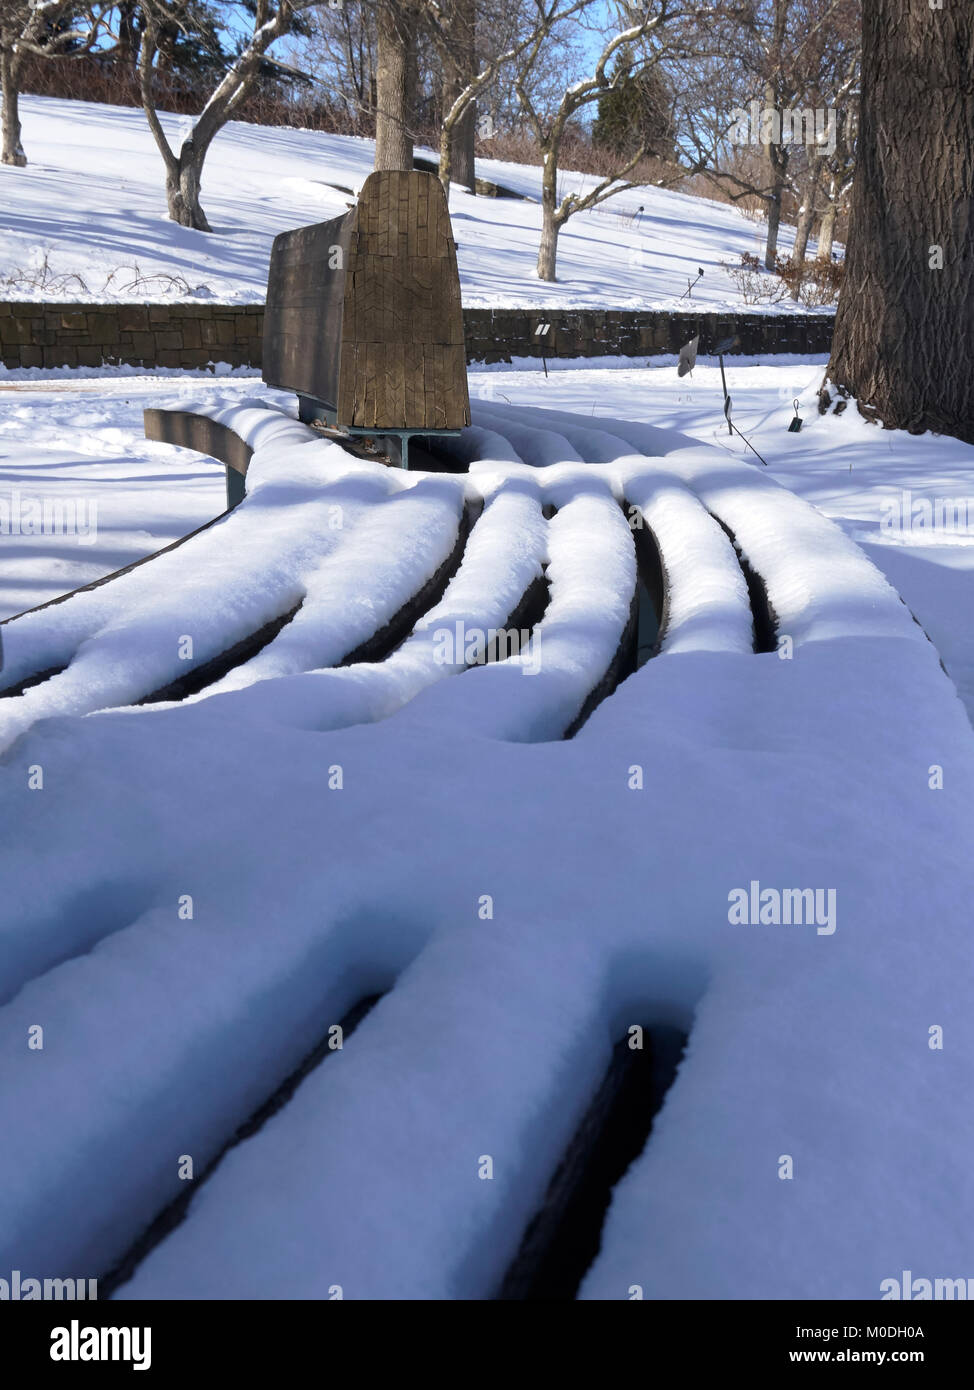 Schnee auf Lattenrost aus Holz Werkbank Stockfoto